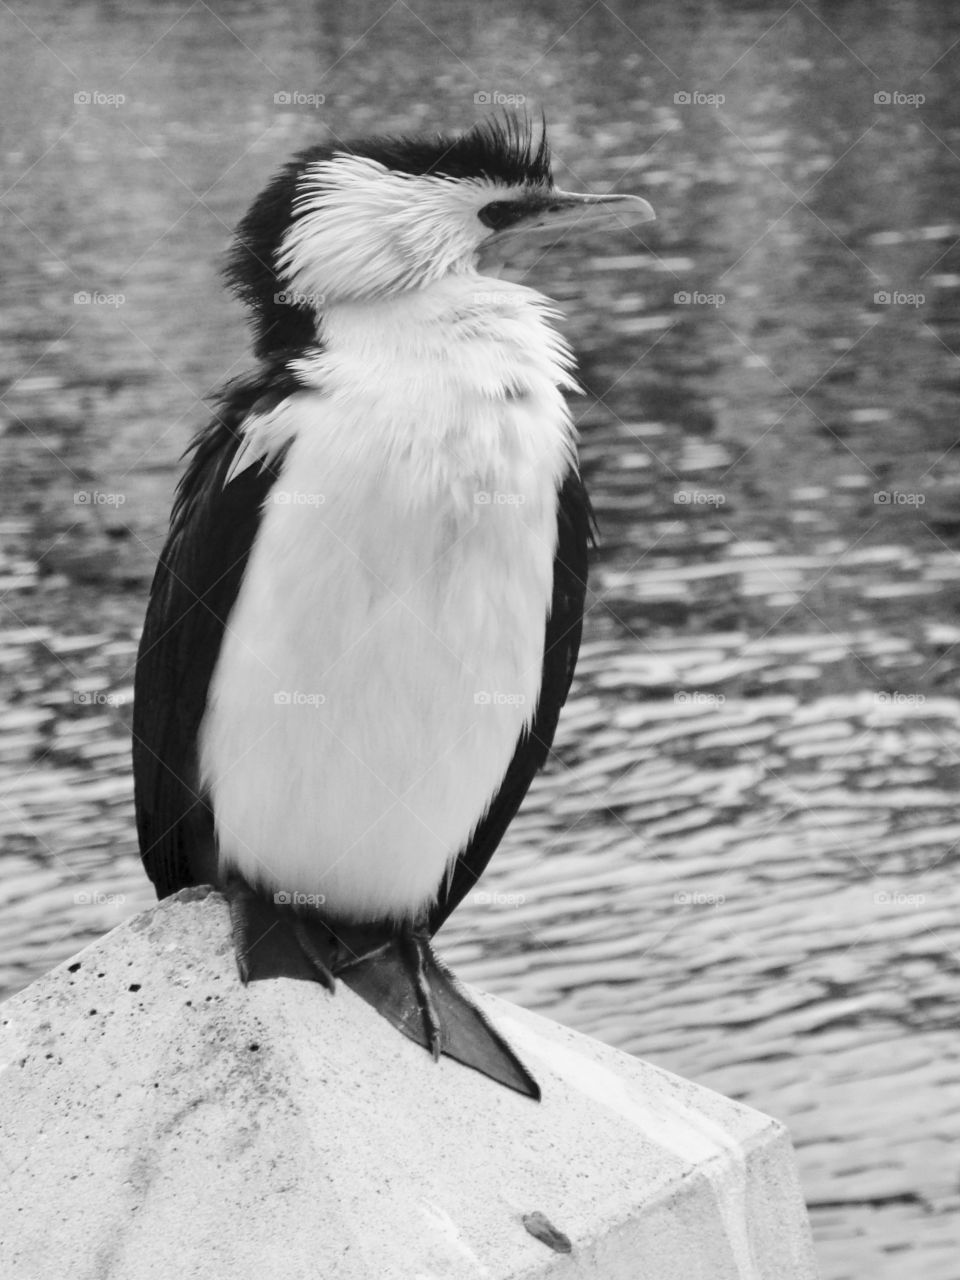 A Bird named Cormorant. Monochrome image.